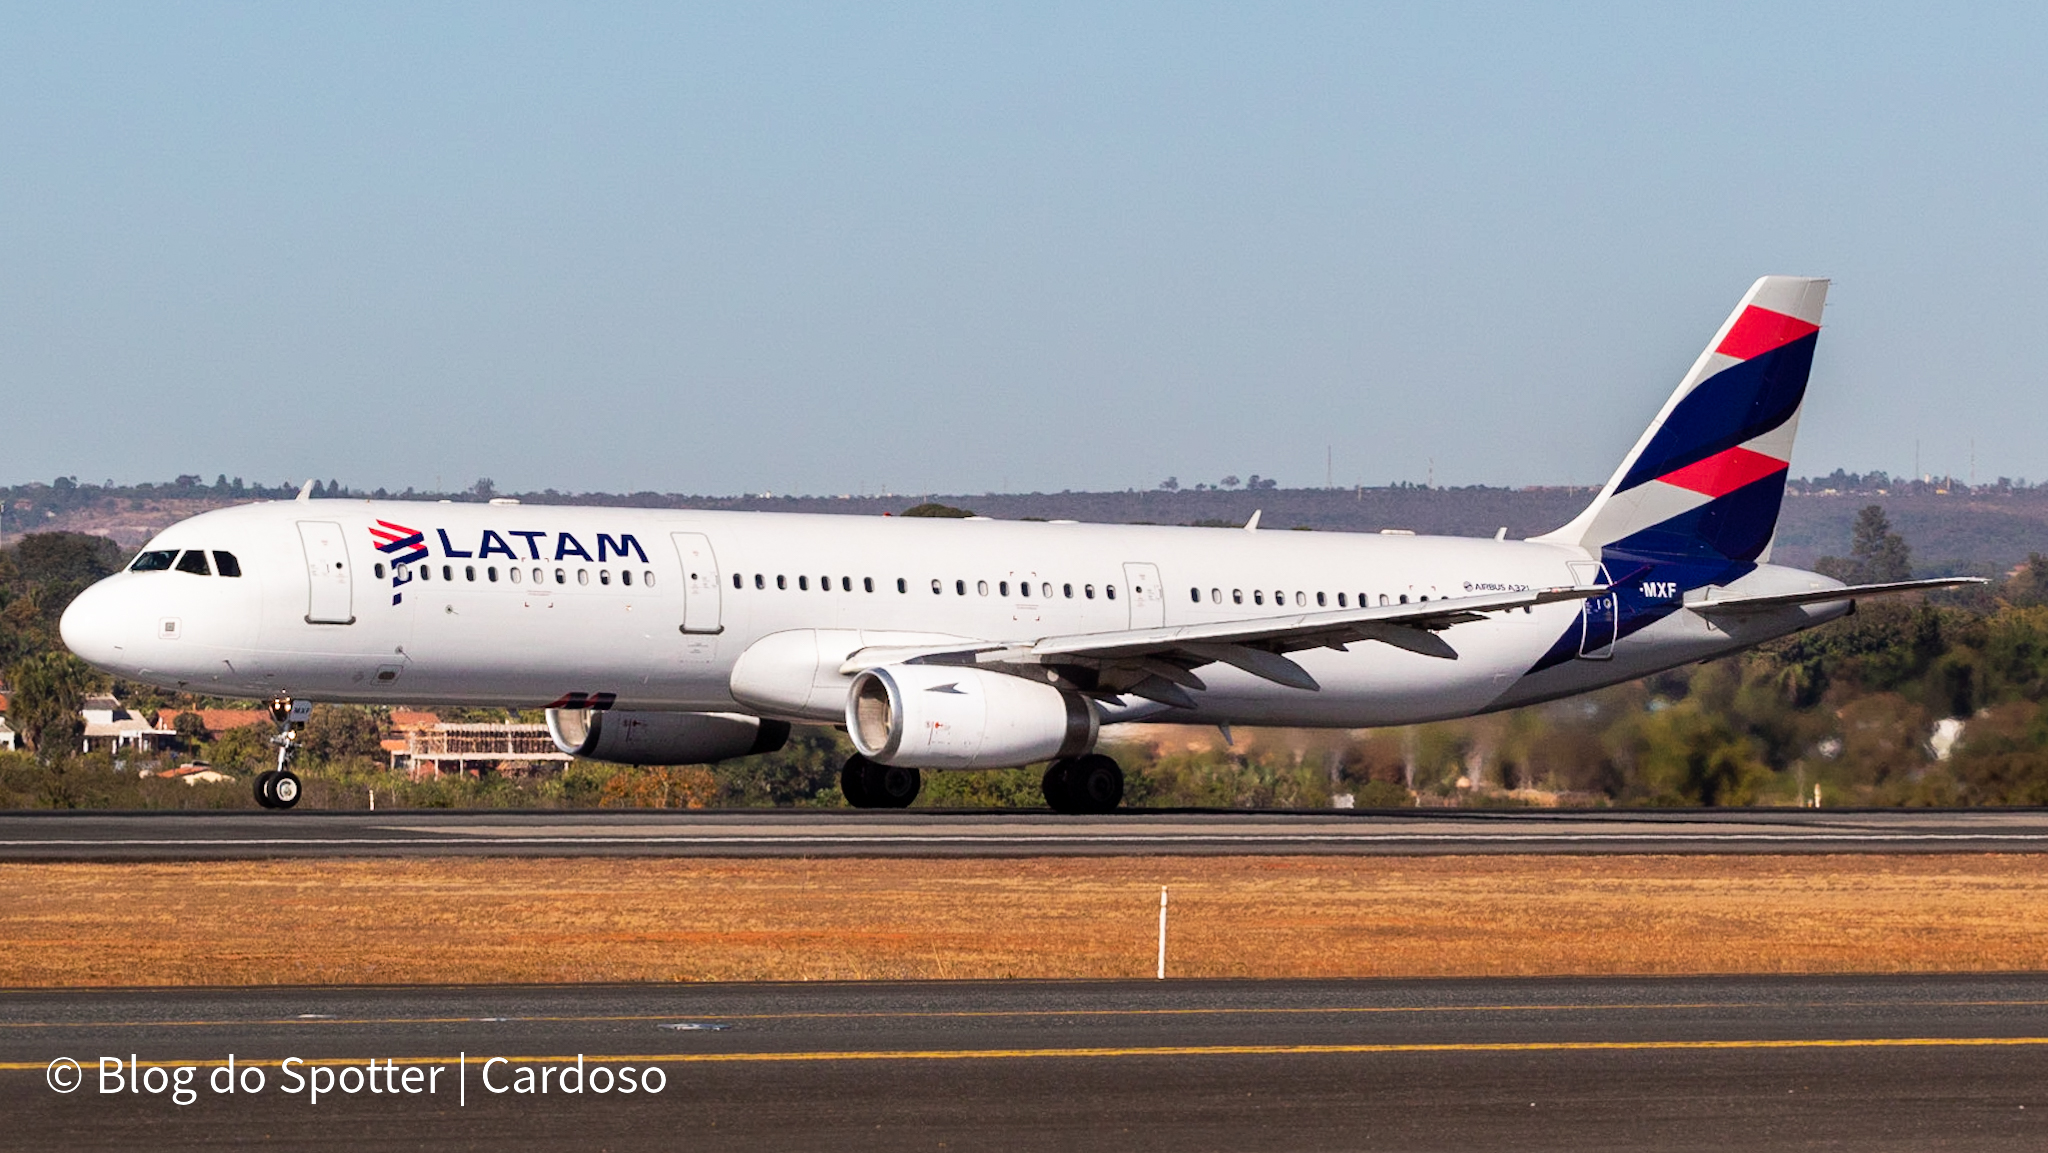 PT-MXF - Airbus A321-231 - LATAM Airlines